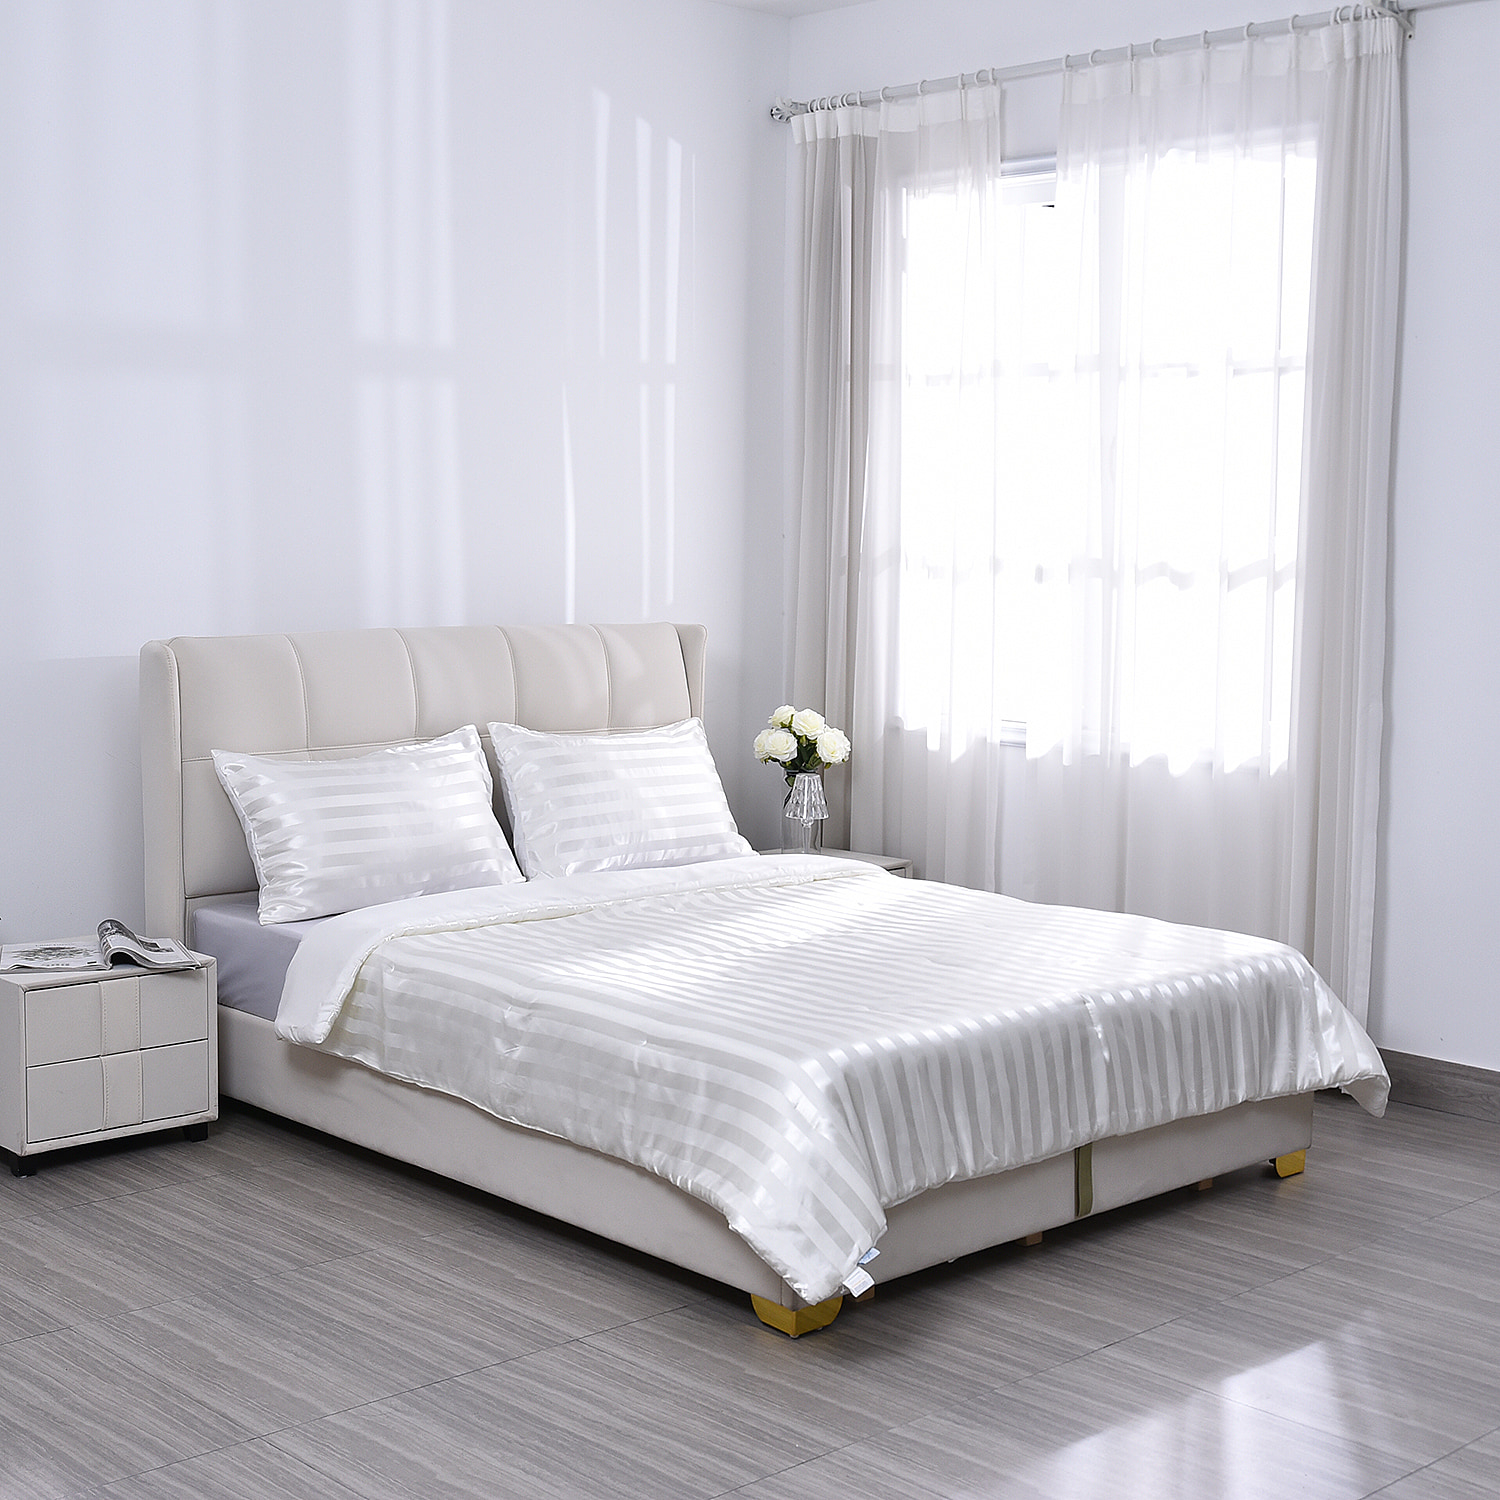 Polyester-Patterned-Comforter-and-Duvet-Size-200x1-cm-White-White